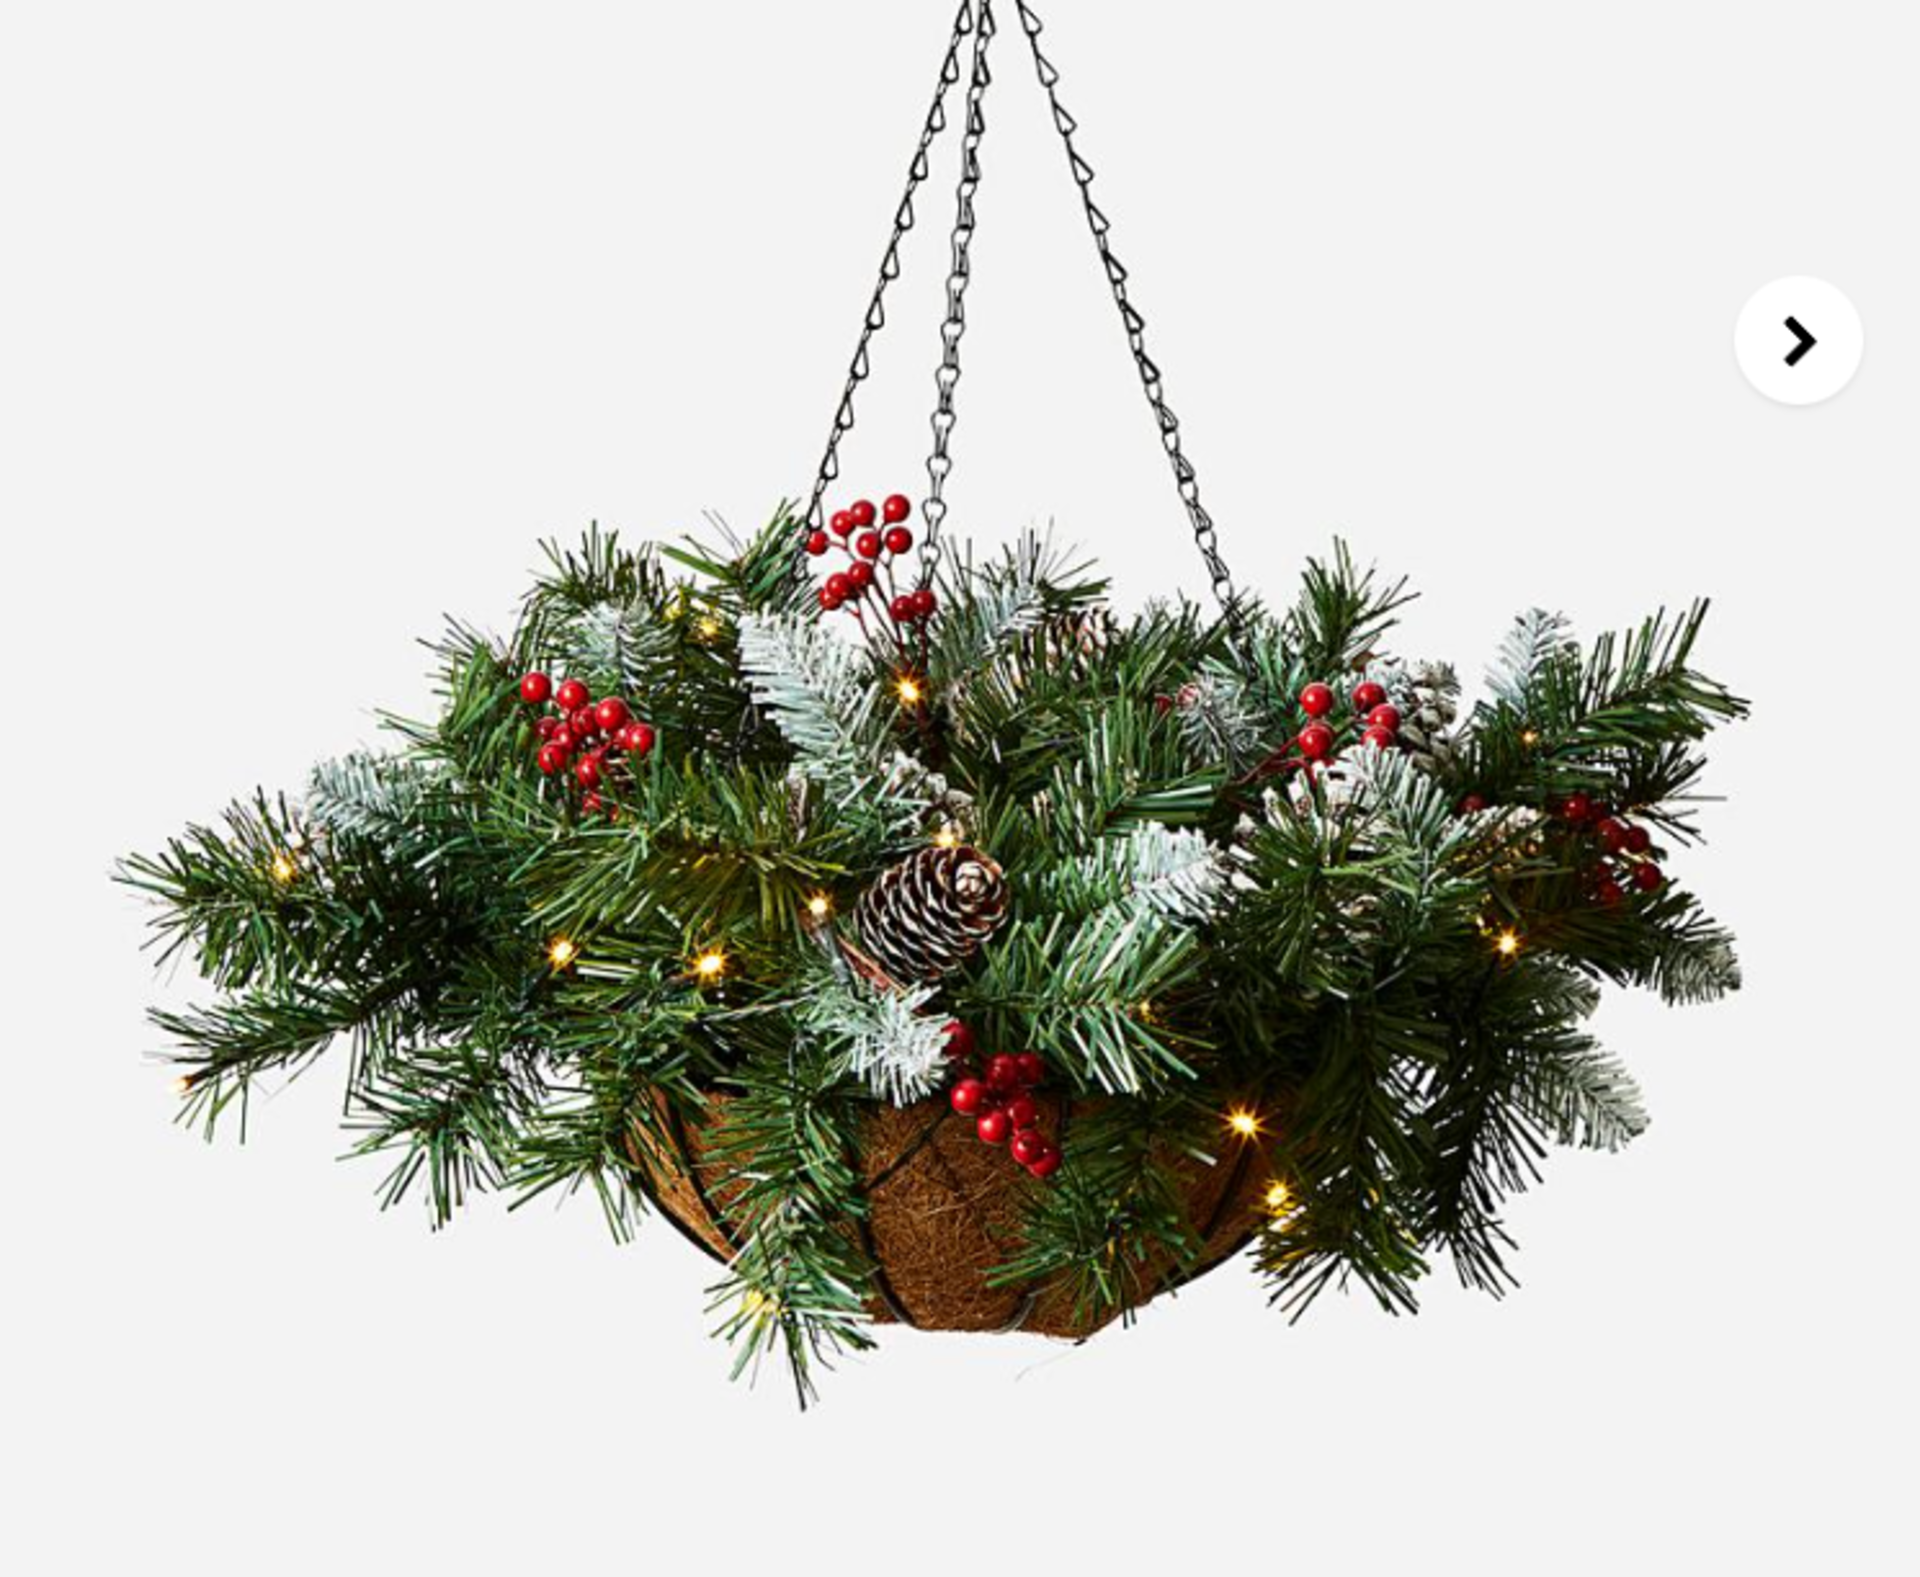 New Jersey Hanging Basket. - ER28. 30cm diameter hanging basket with approx 60cm green New Jersey